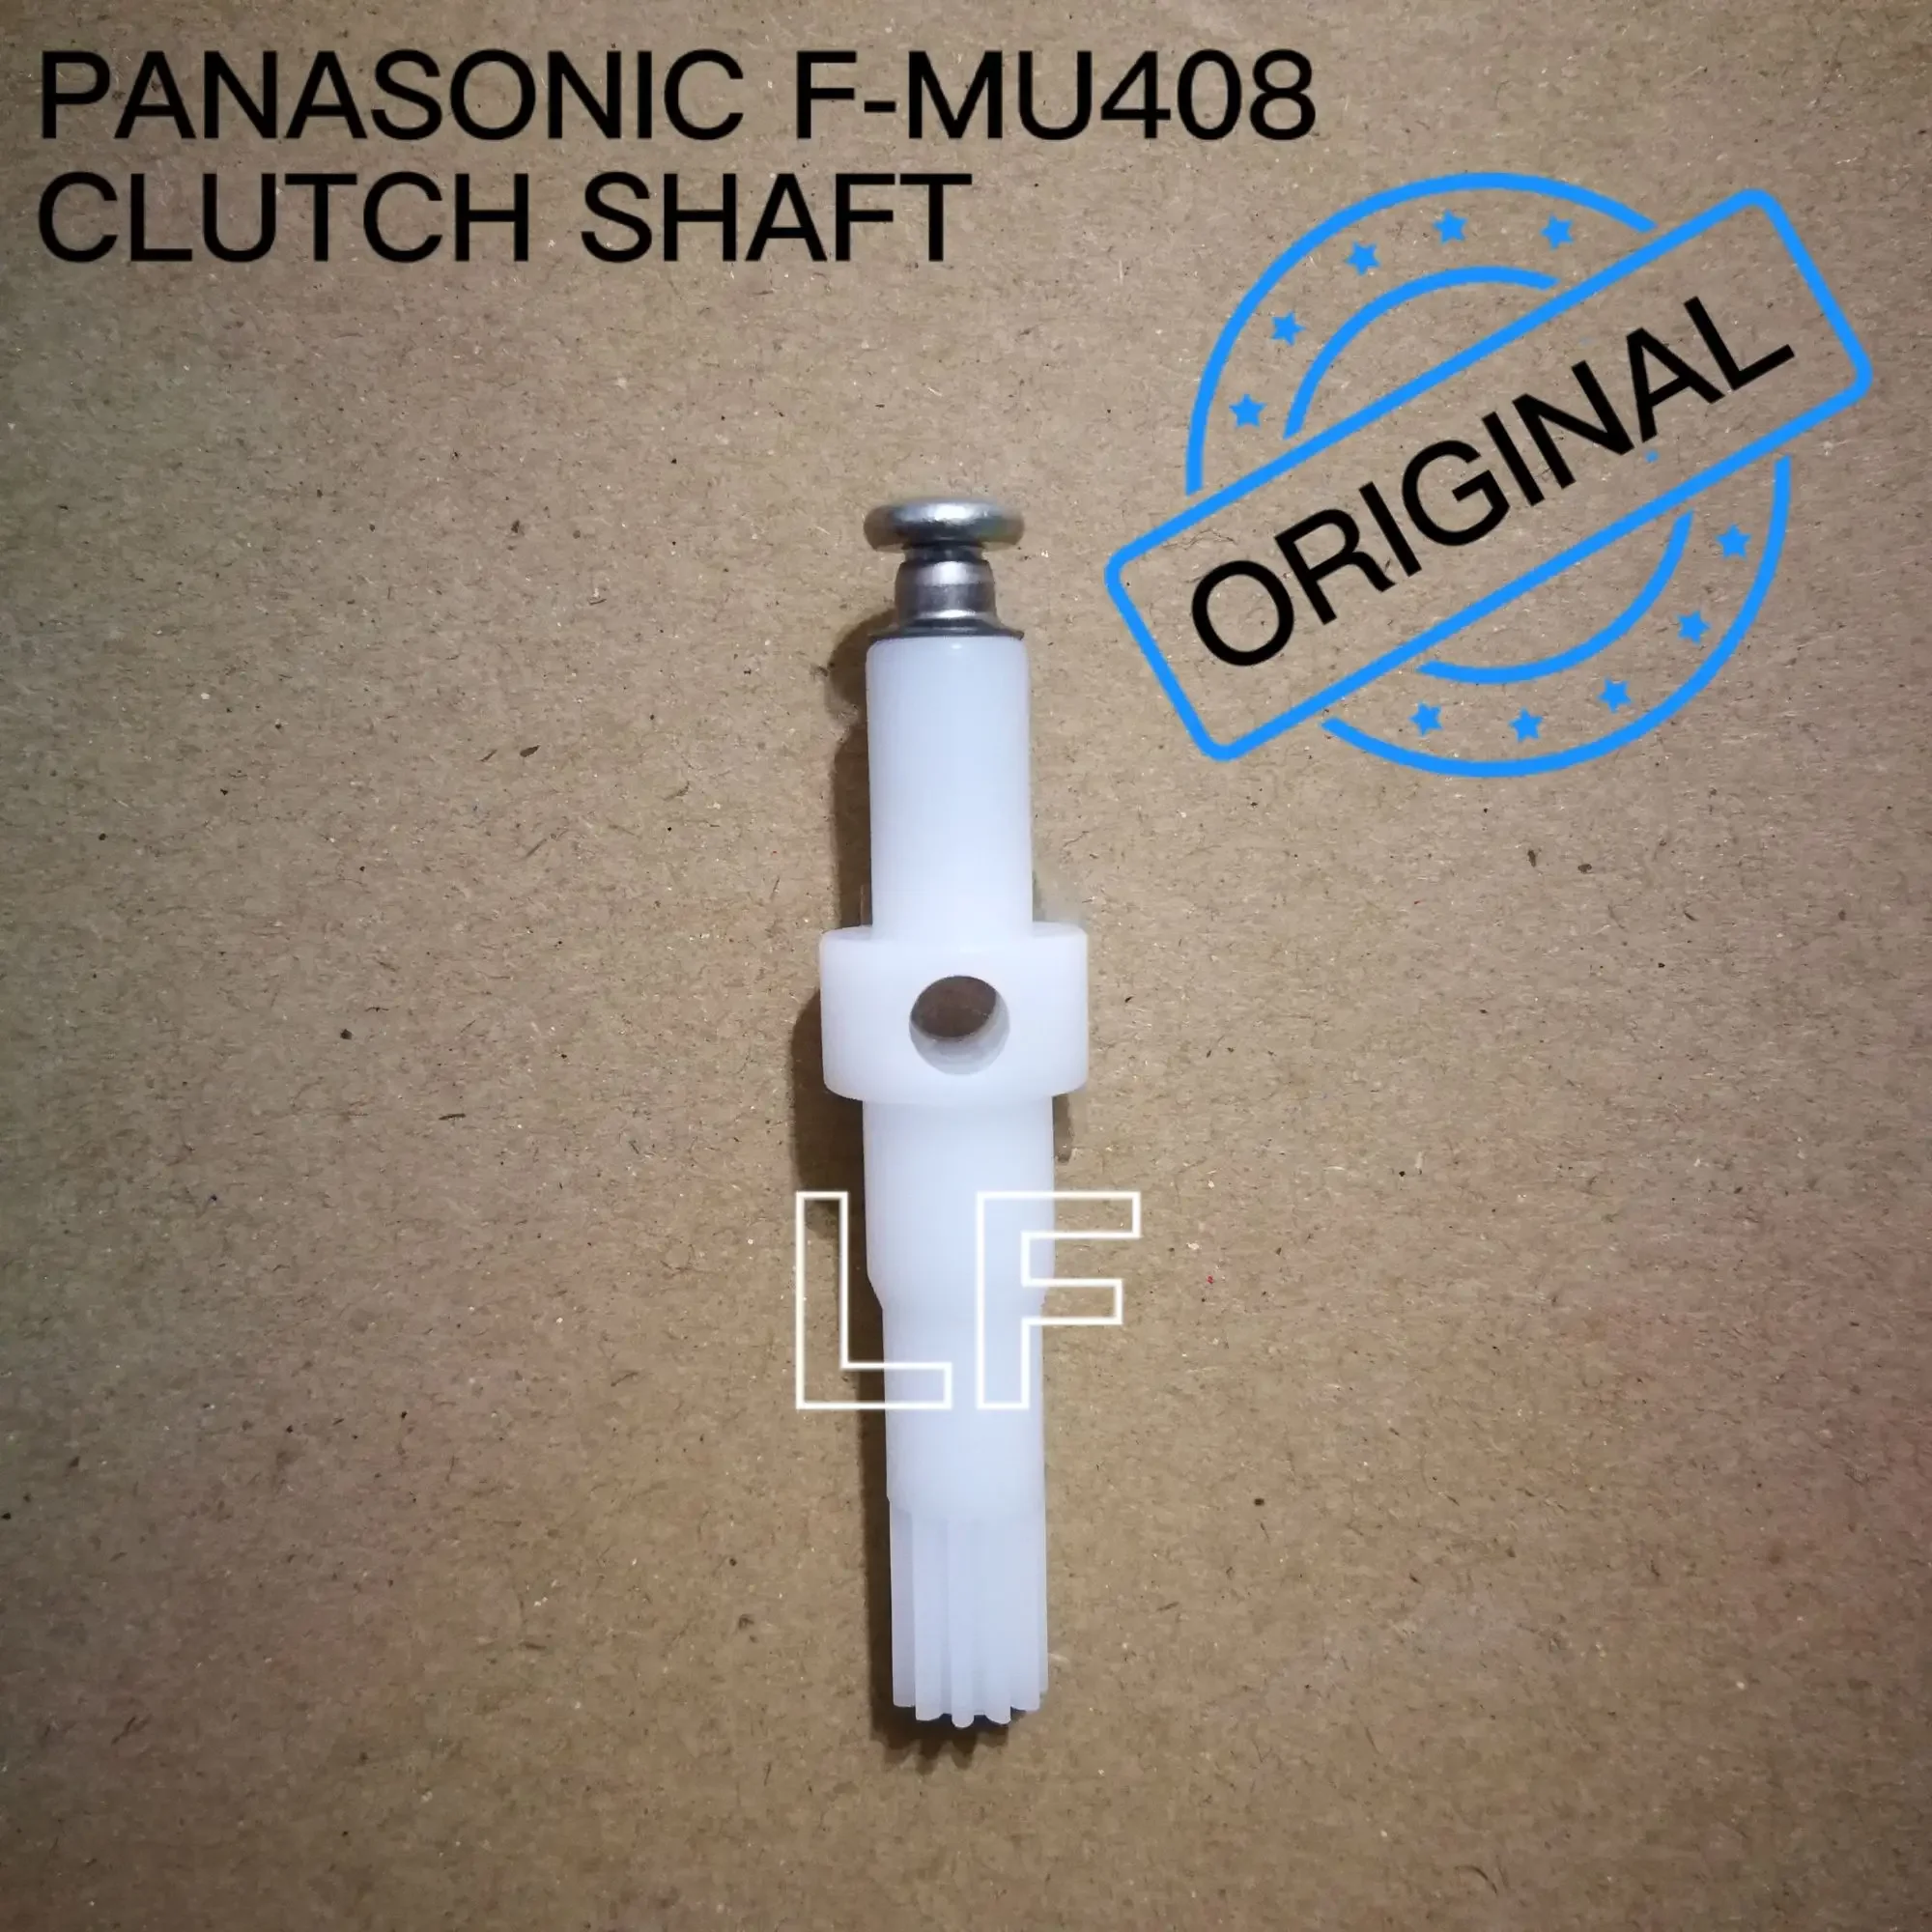 PANASONIC/KDK 16" WALL FAN CLUTCH SHAFT(ORIGINAL)F-MU408